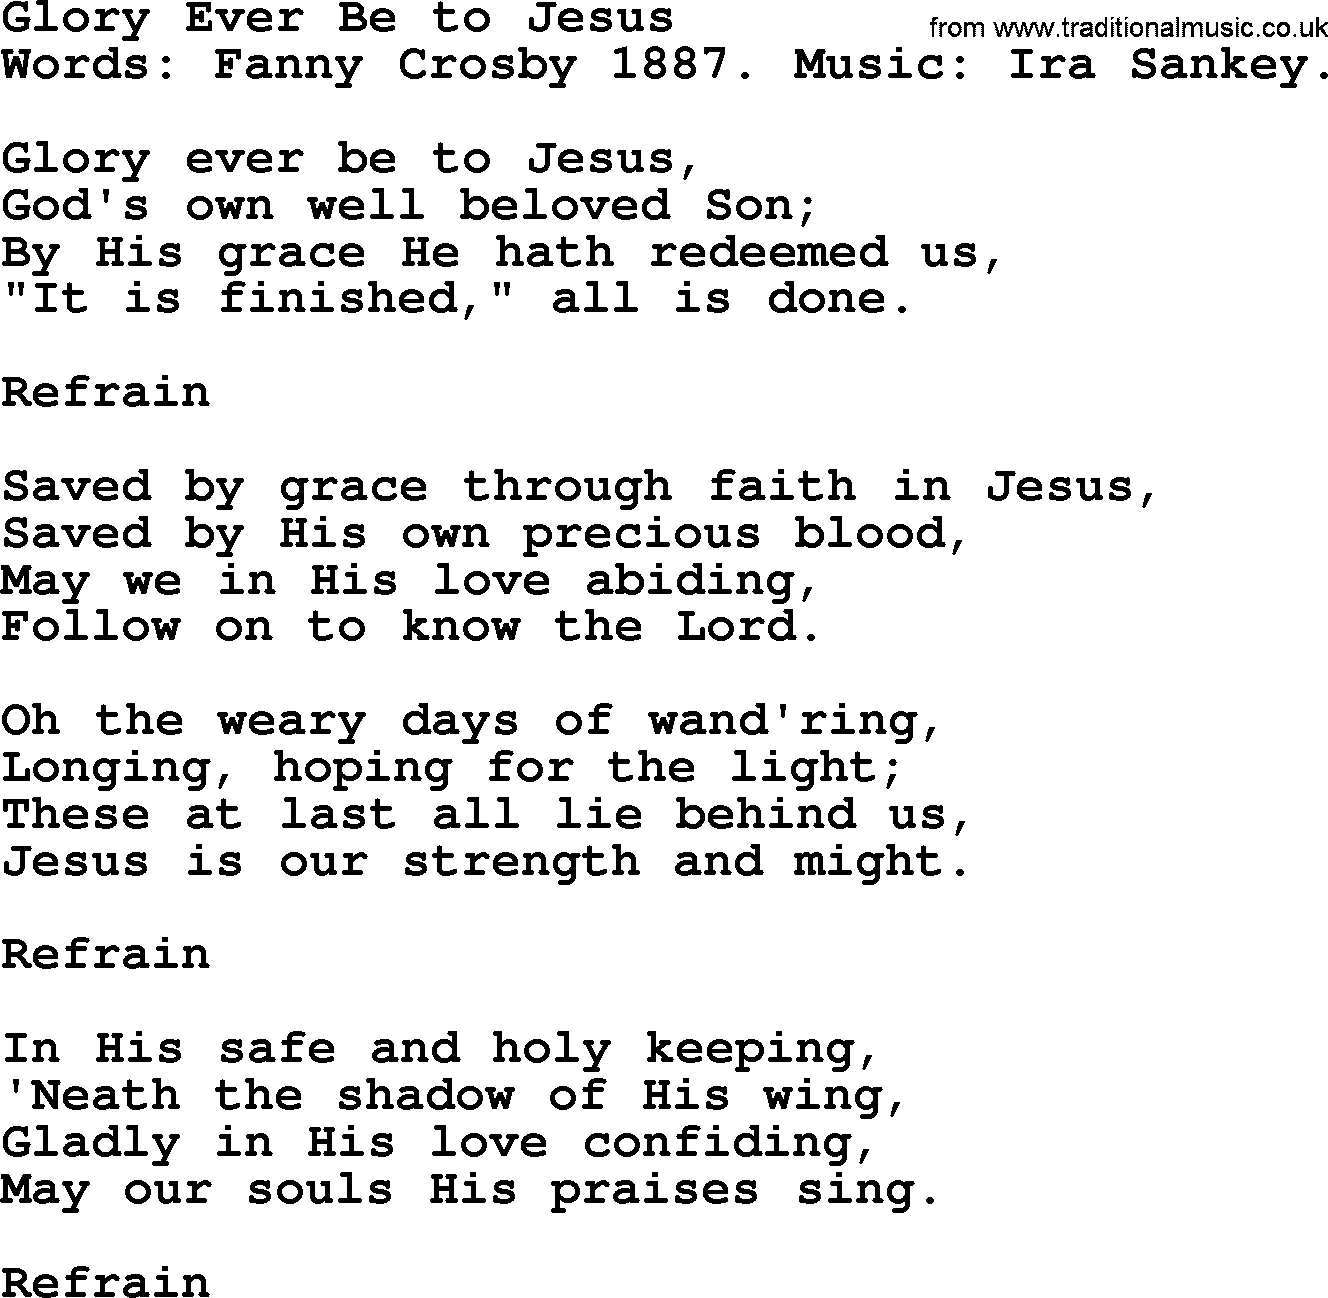 Fanny Crosby song: Glory Ever Be To Jesus, lyrics